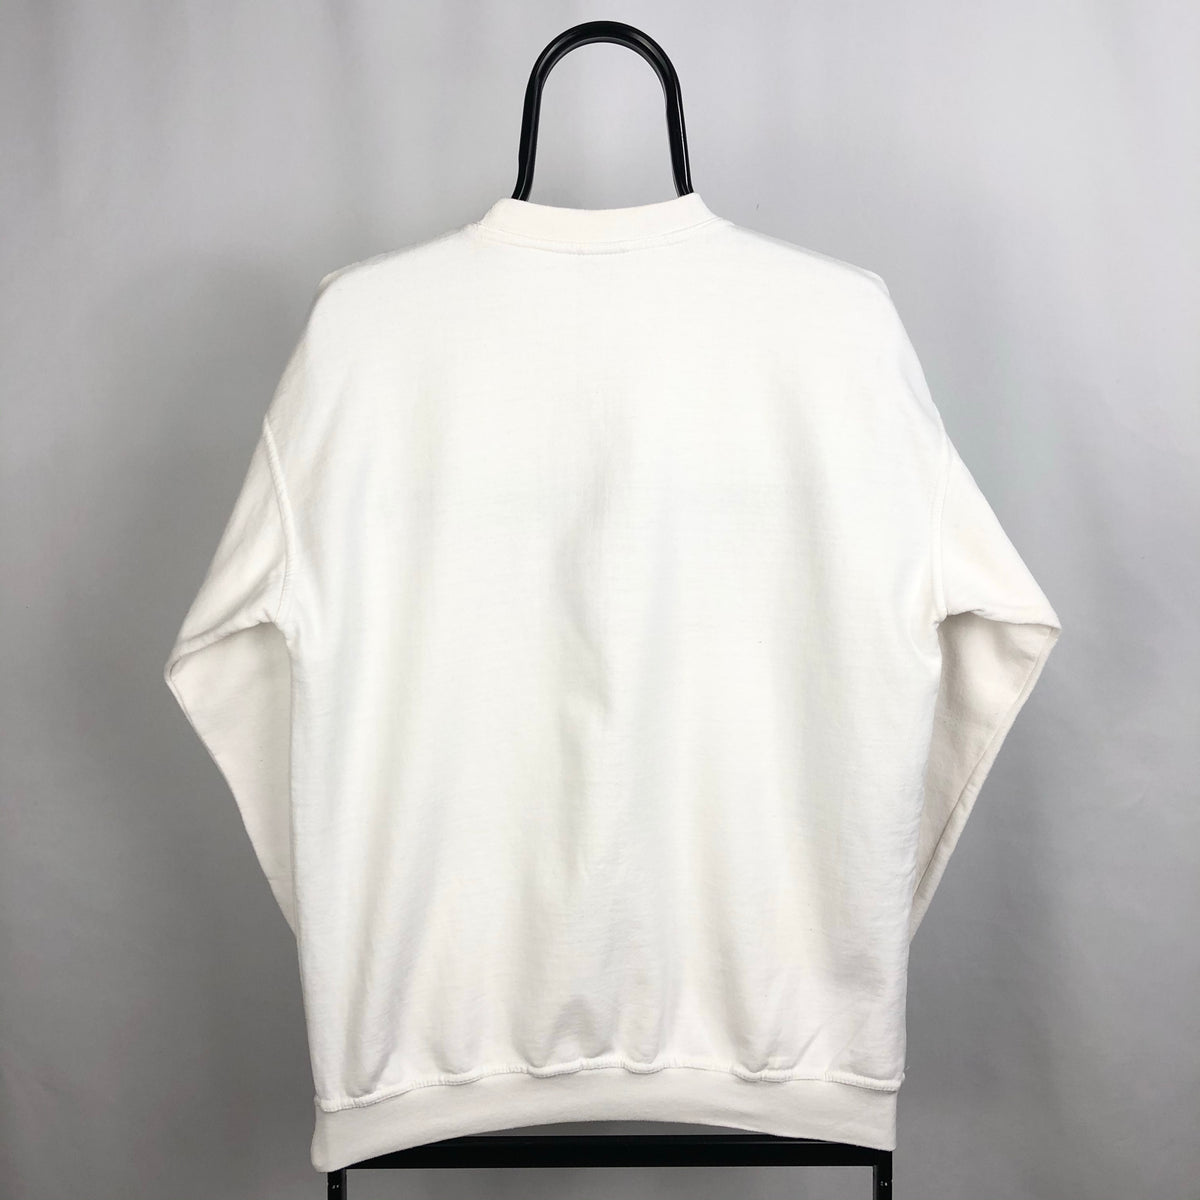 Vintage 90s Nike Spellout Sweatshirt in White - Men's Small/Women's Me ...